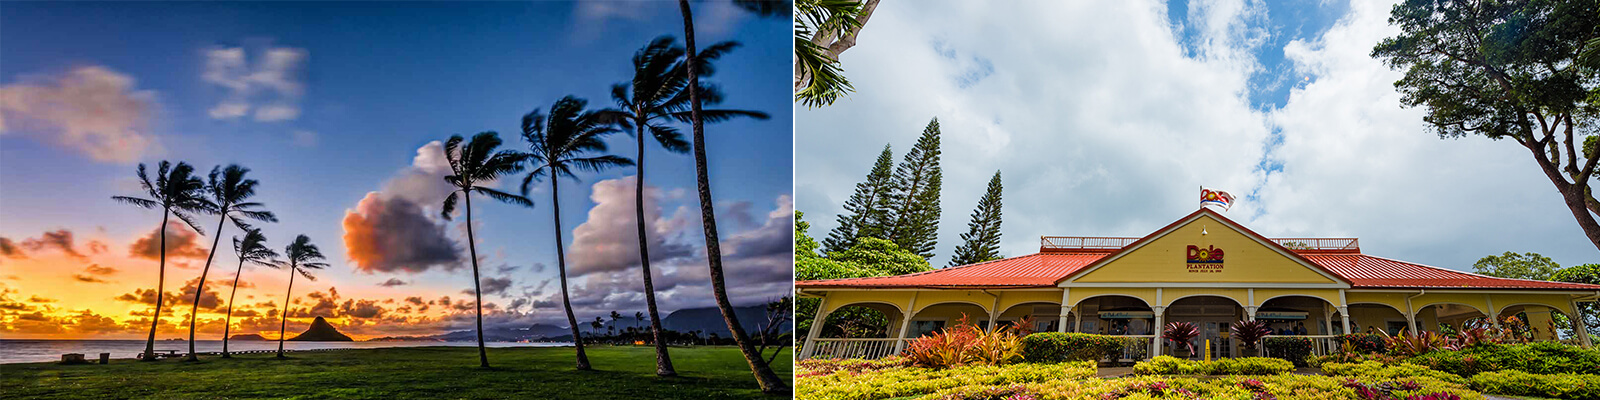 Oahu Grand Circle Island Tour Dole Plantation Coupons